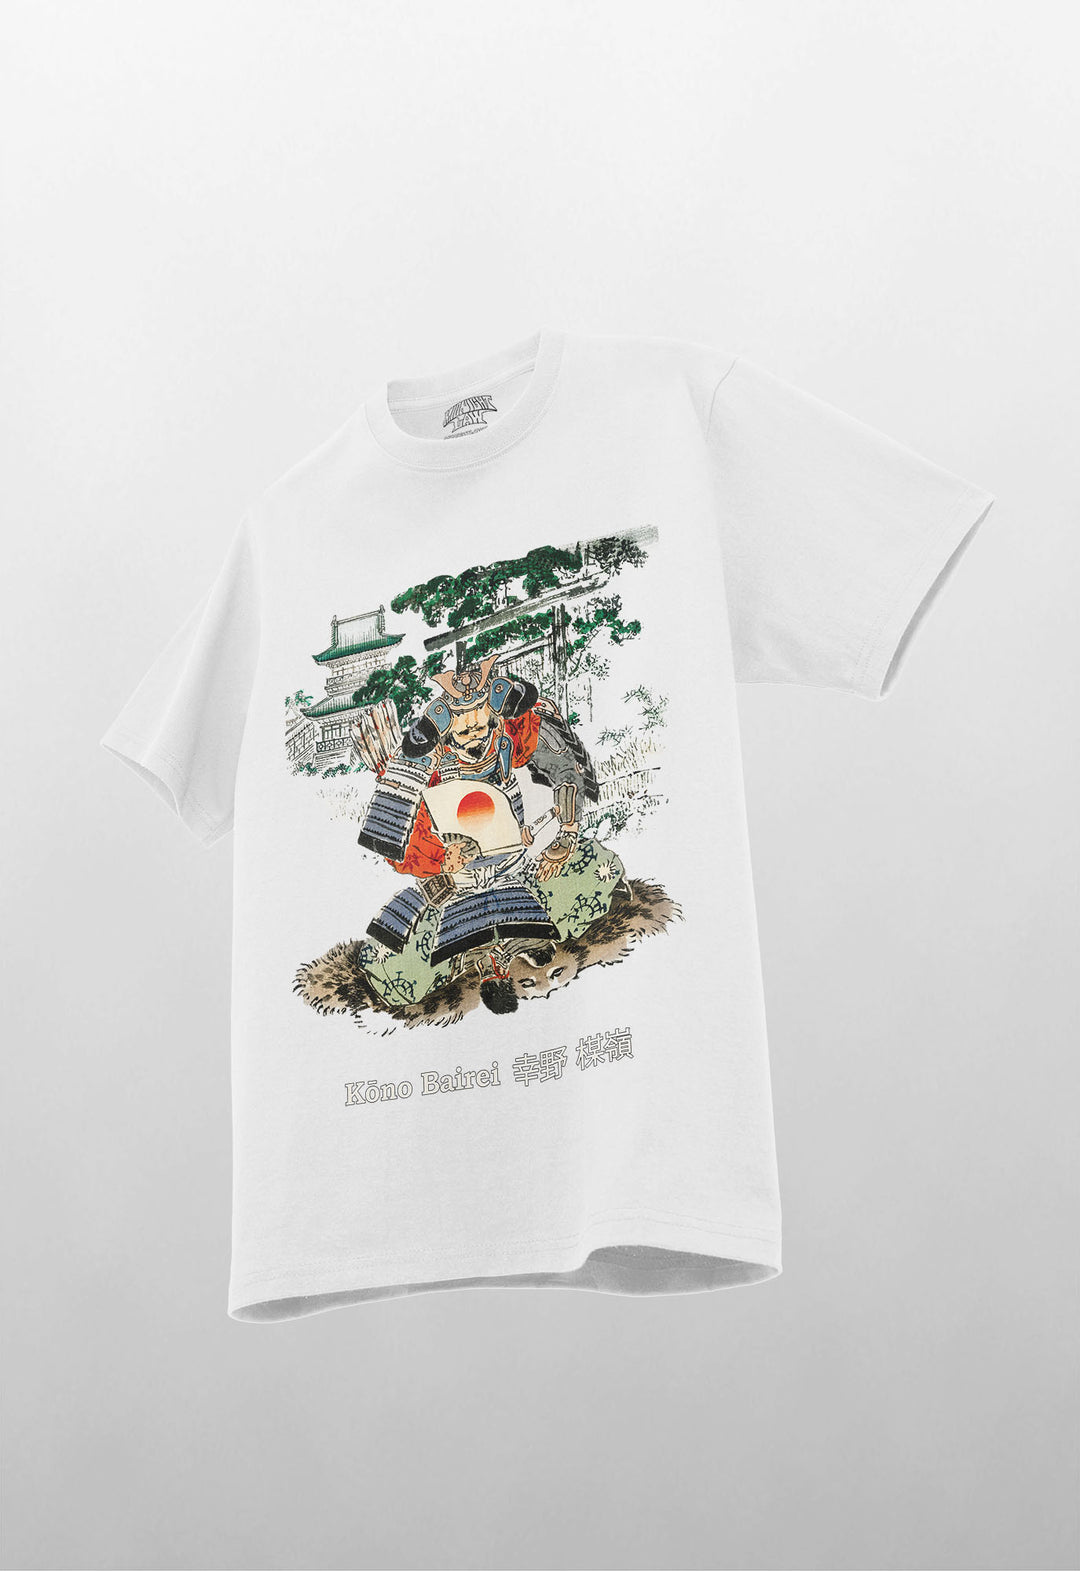 Kono Bairei Oversized T-Shirt